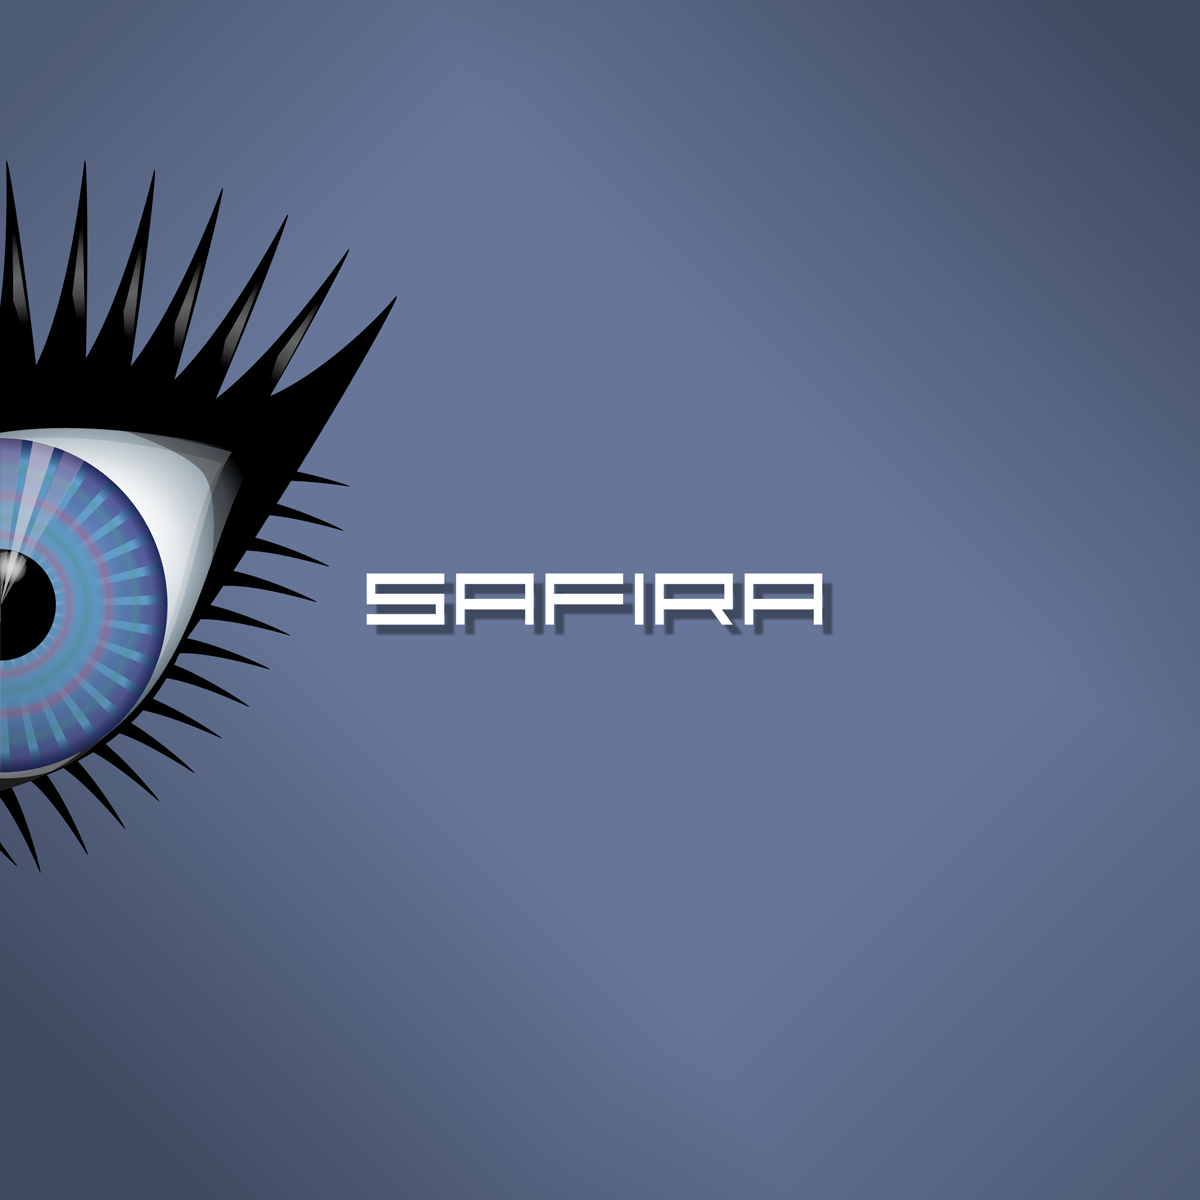 SAFIRA logo